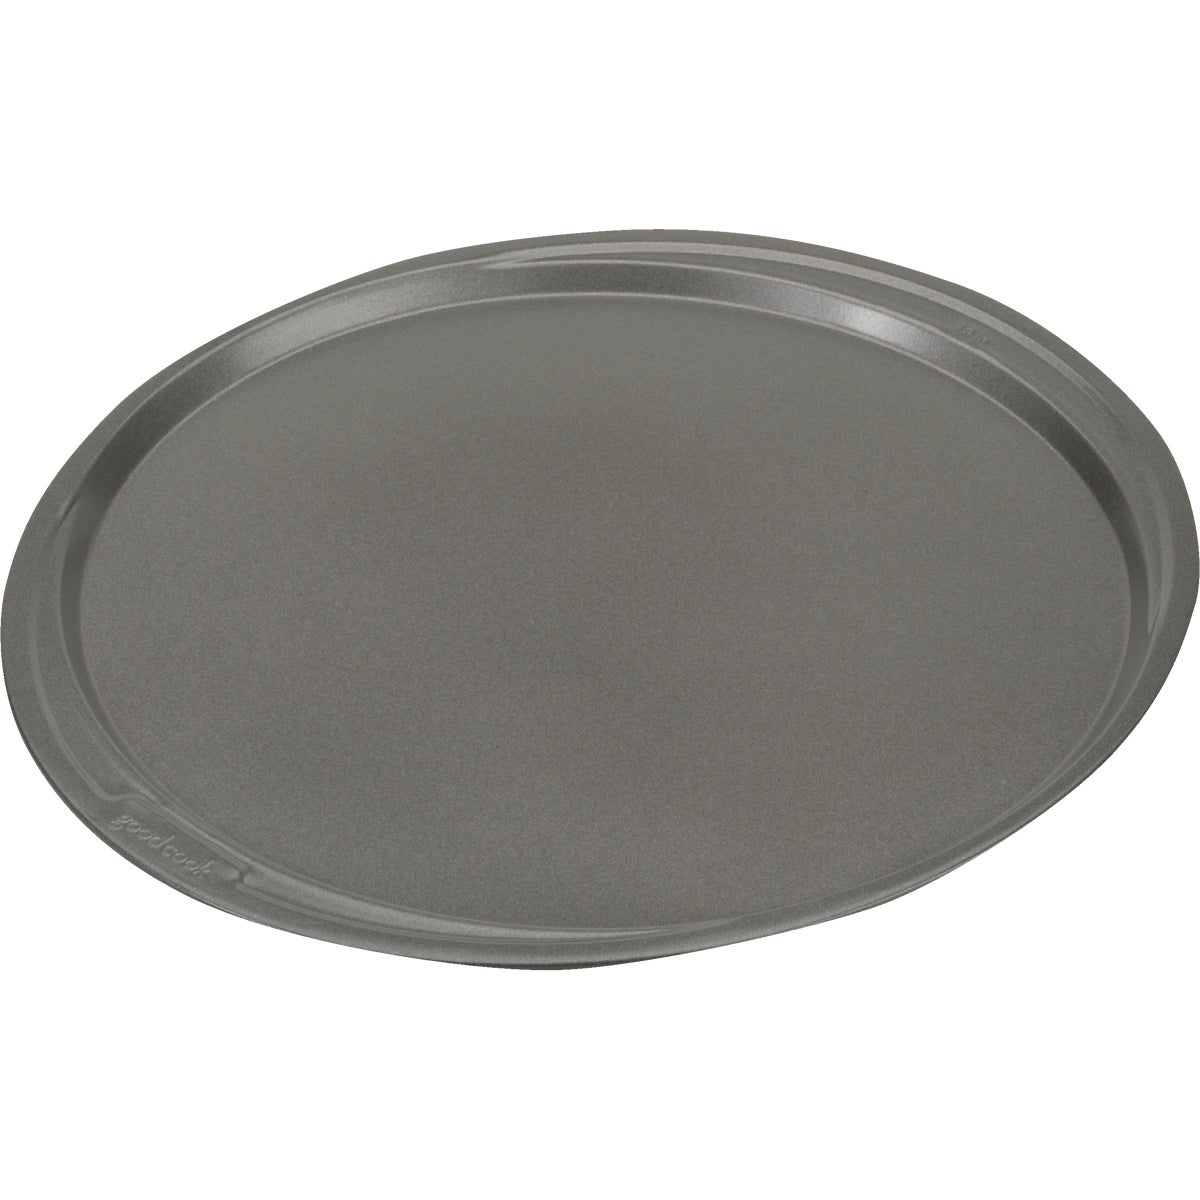 Item 603187, Heavy duty, round steel pizza pan has non-stick coating.